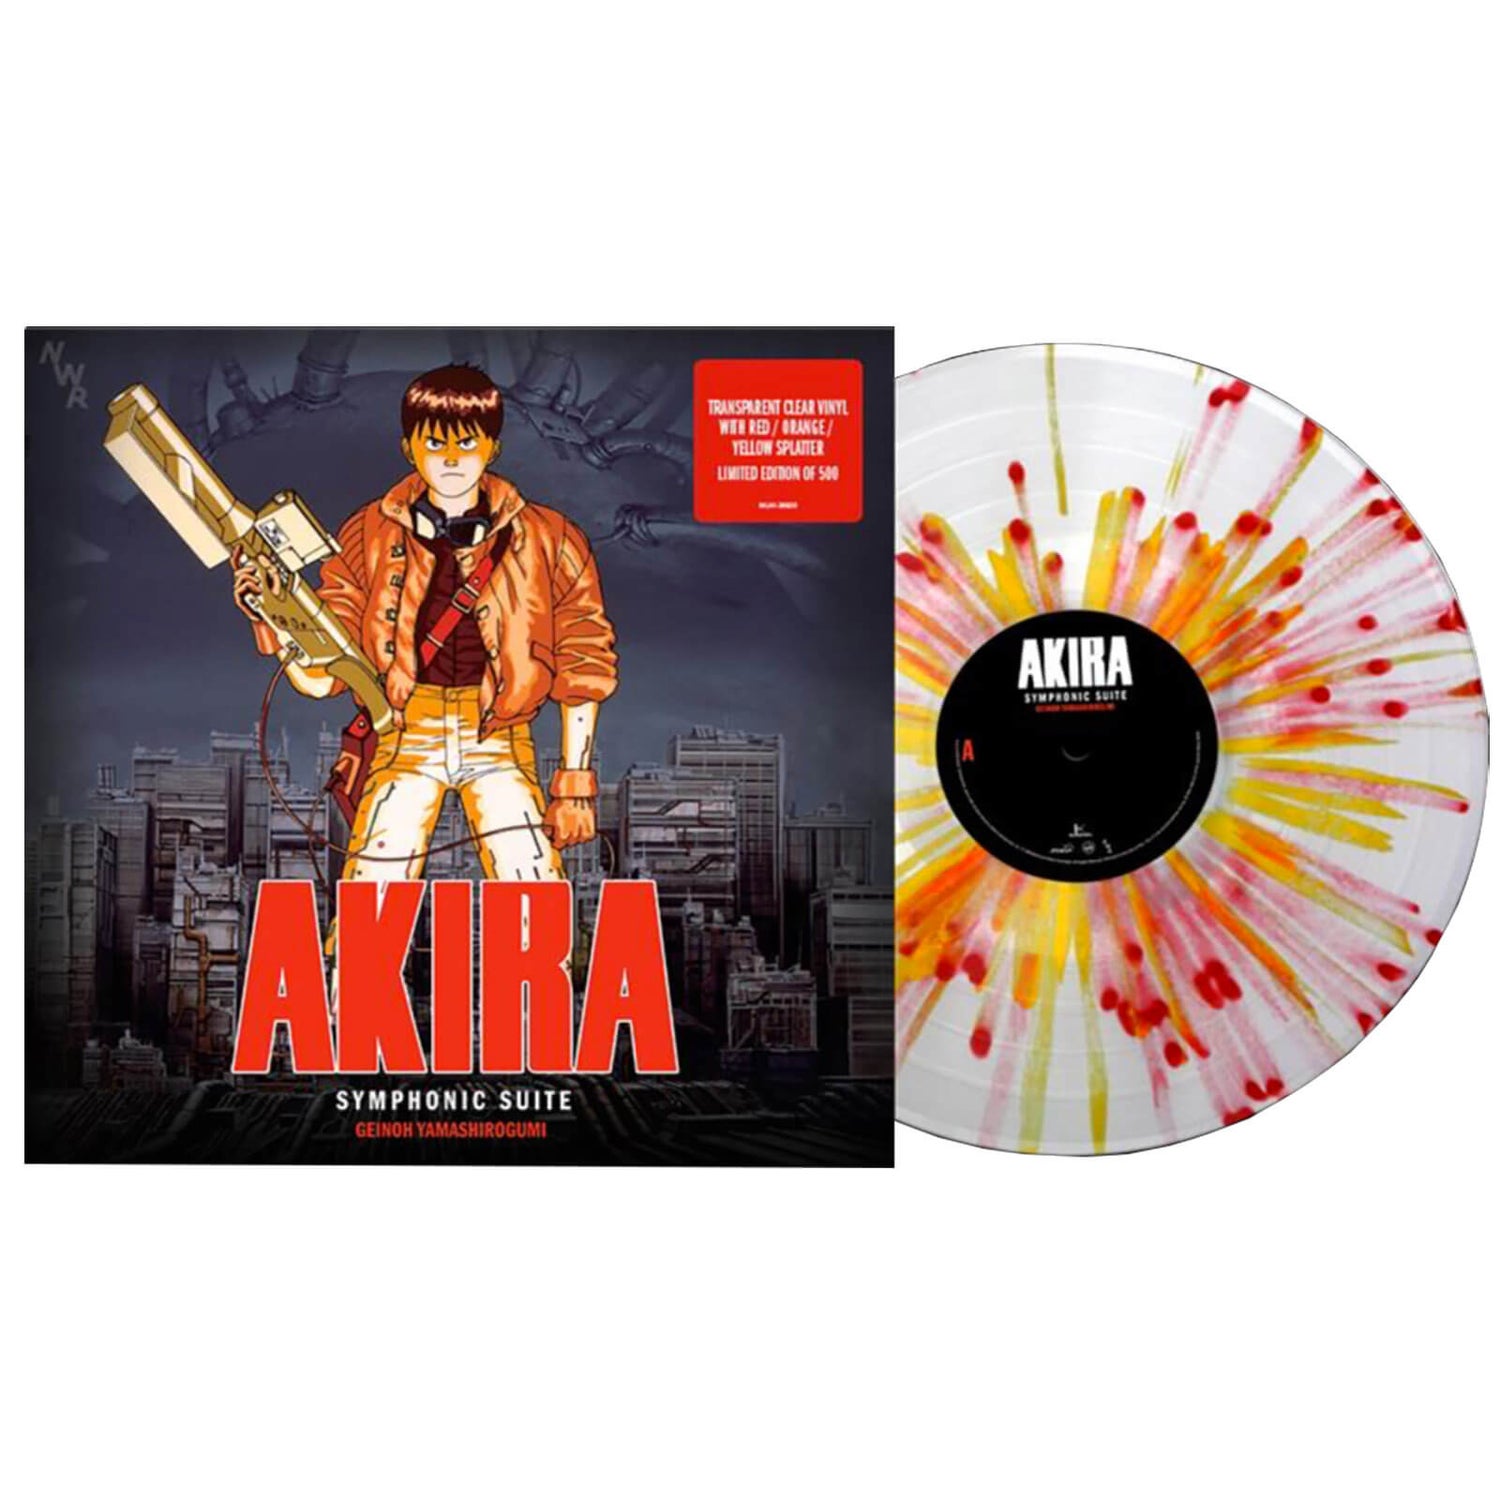 AKIRA Original Soundtrack Album